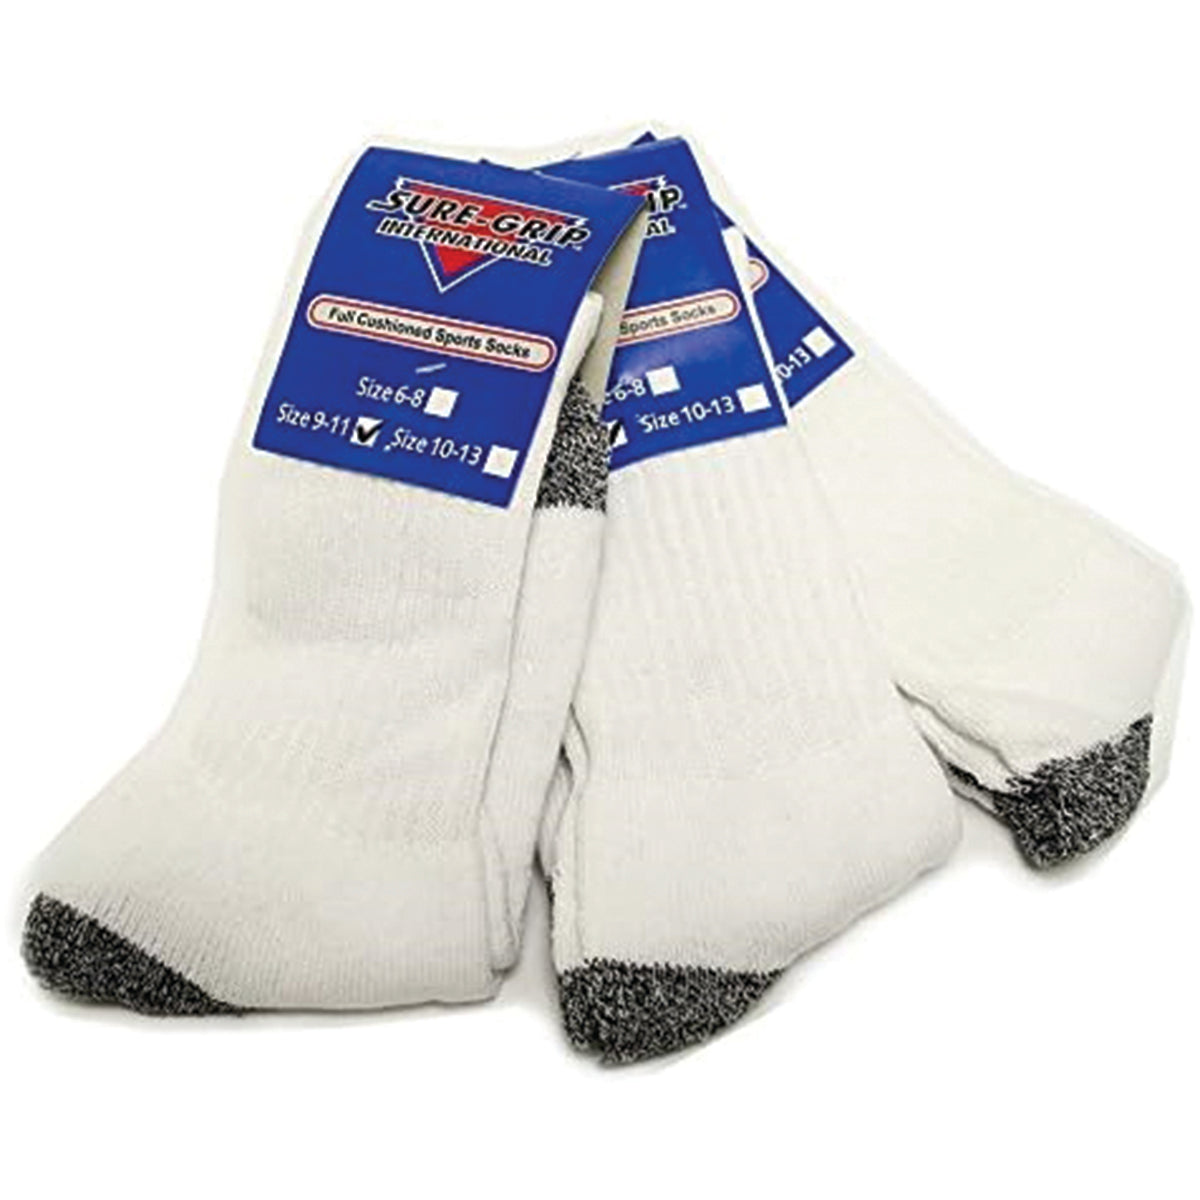 Sure-Grip Socks